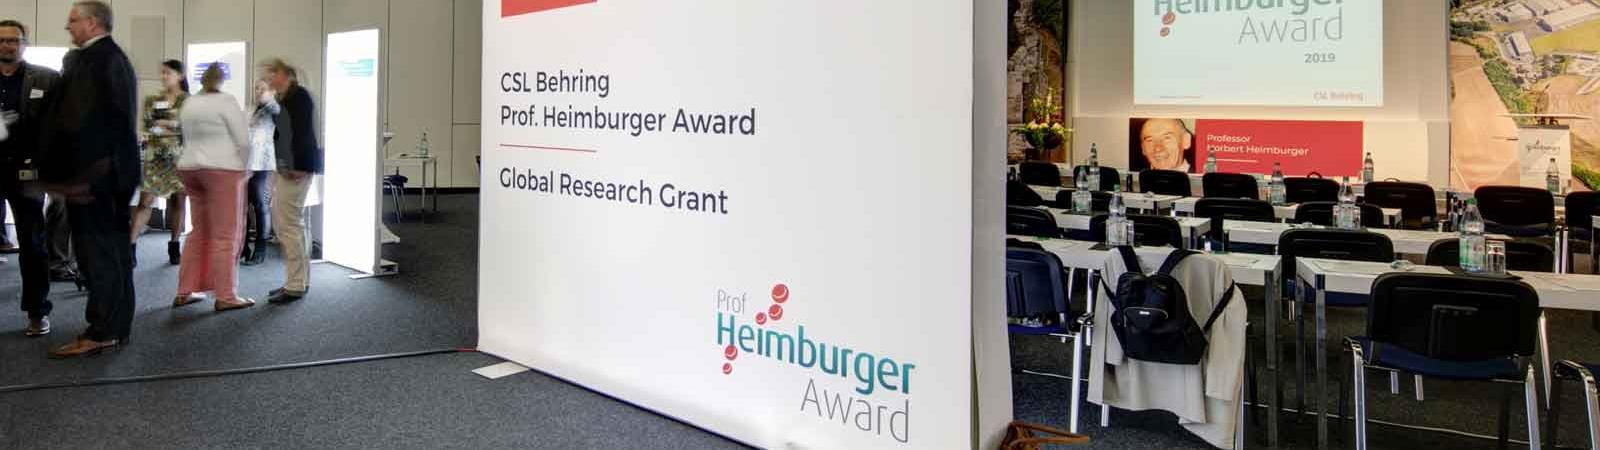 Premio Profesor Heimburger